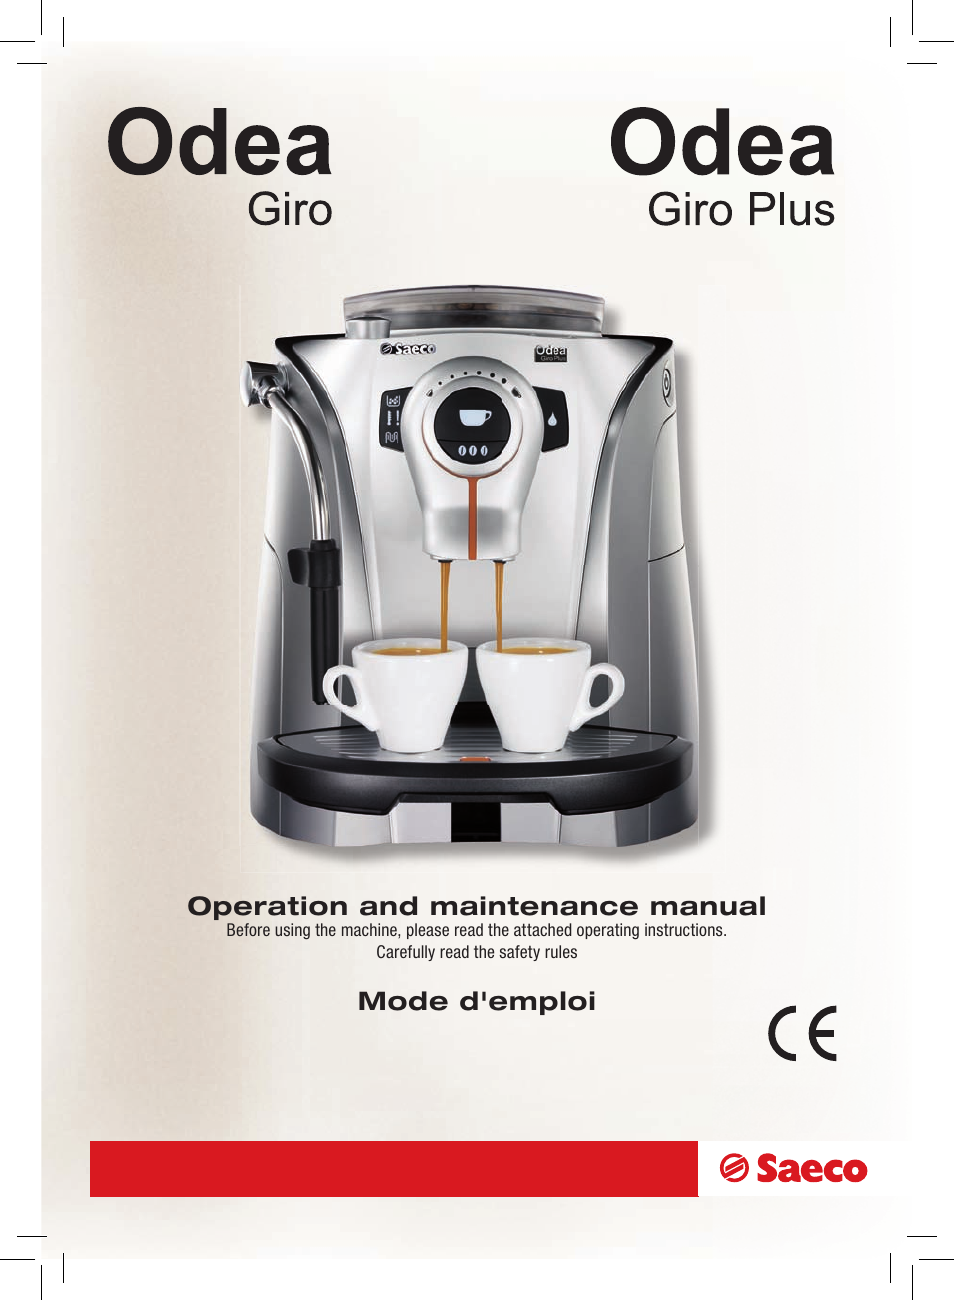 Philips Saeco Odea Giro User Manual | 22 pages | Also for: Odea Giro Plus